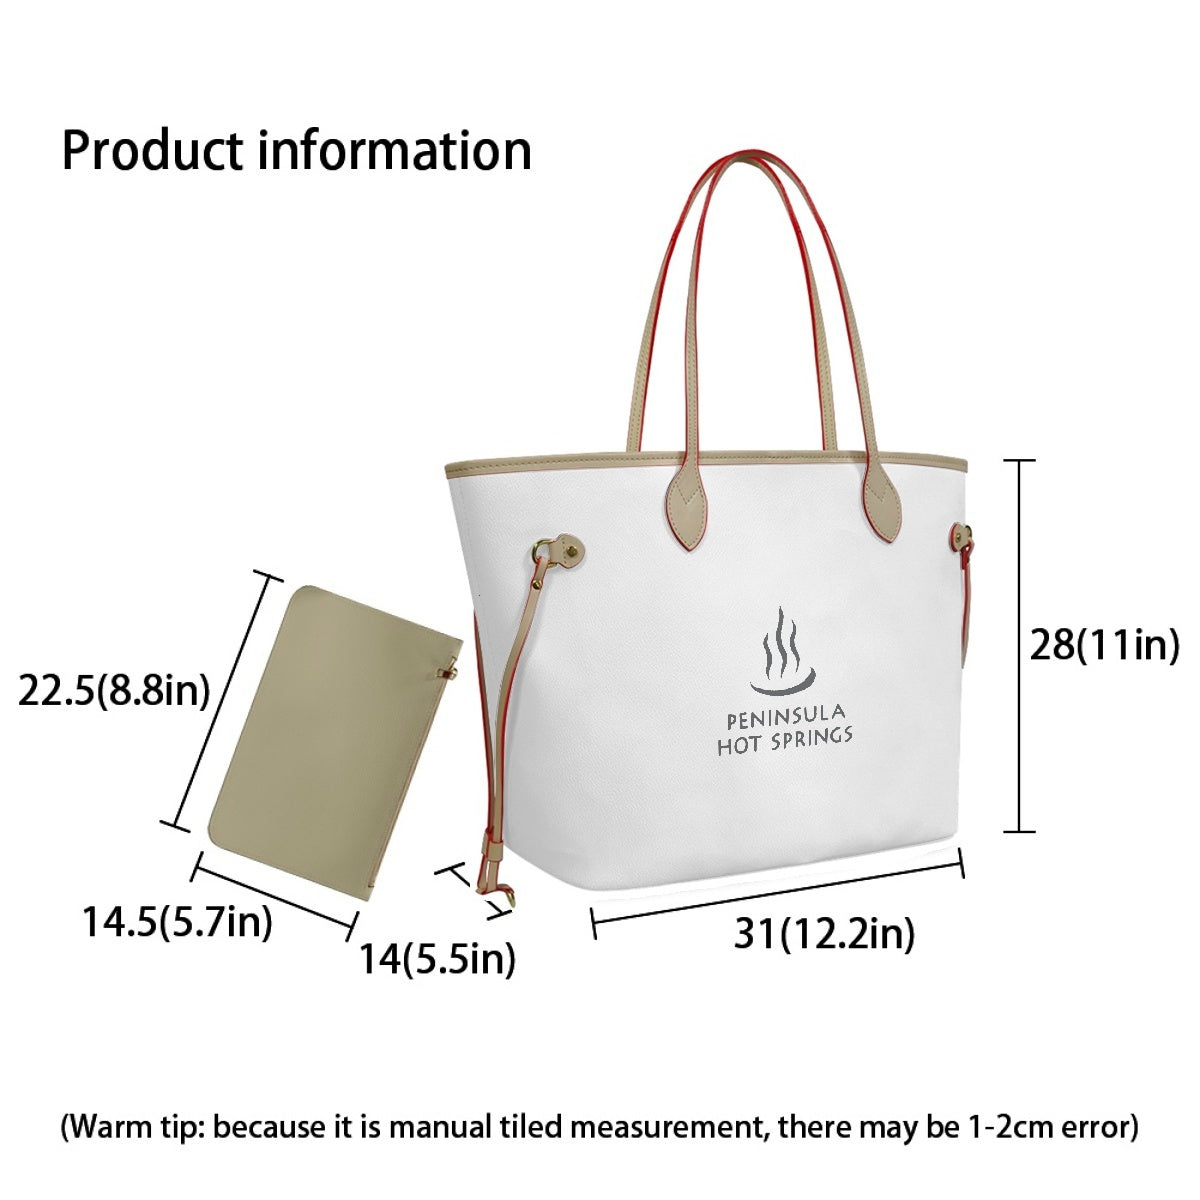 PENINSULAR HOT SPRINGS PU Shoulder Bag with a smaller bag